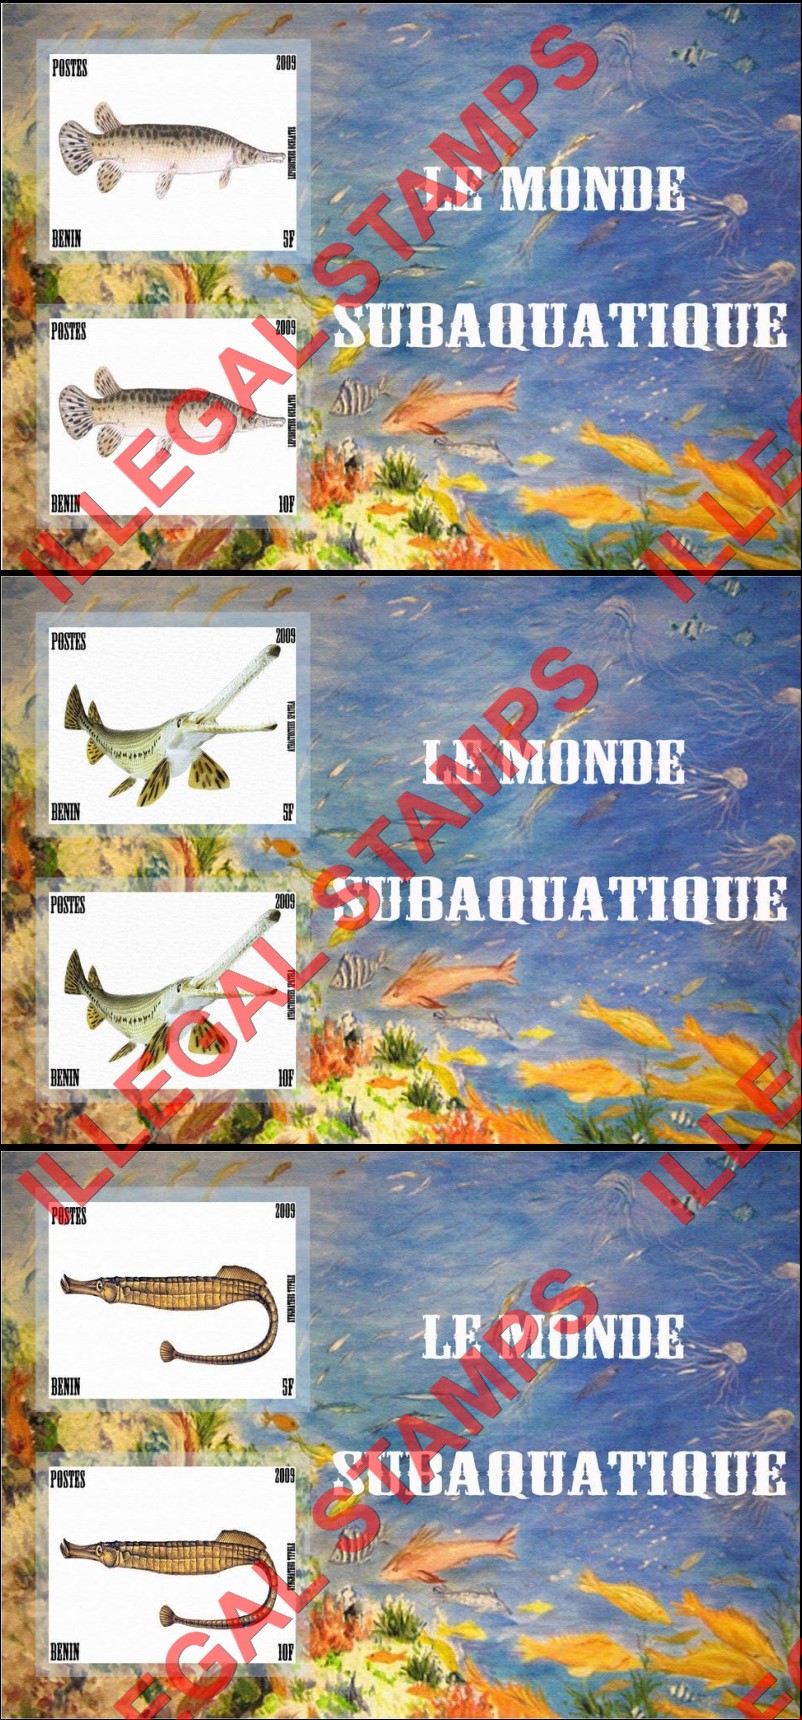 Benin 2009 Fish Illegal Stamp Souvenir Sheets of 2 (Part 1)